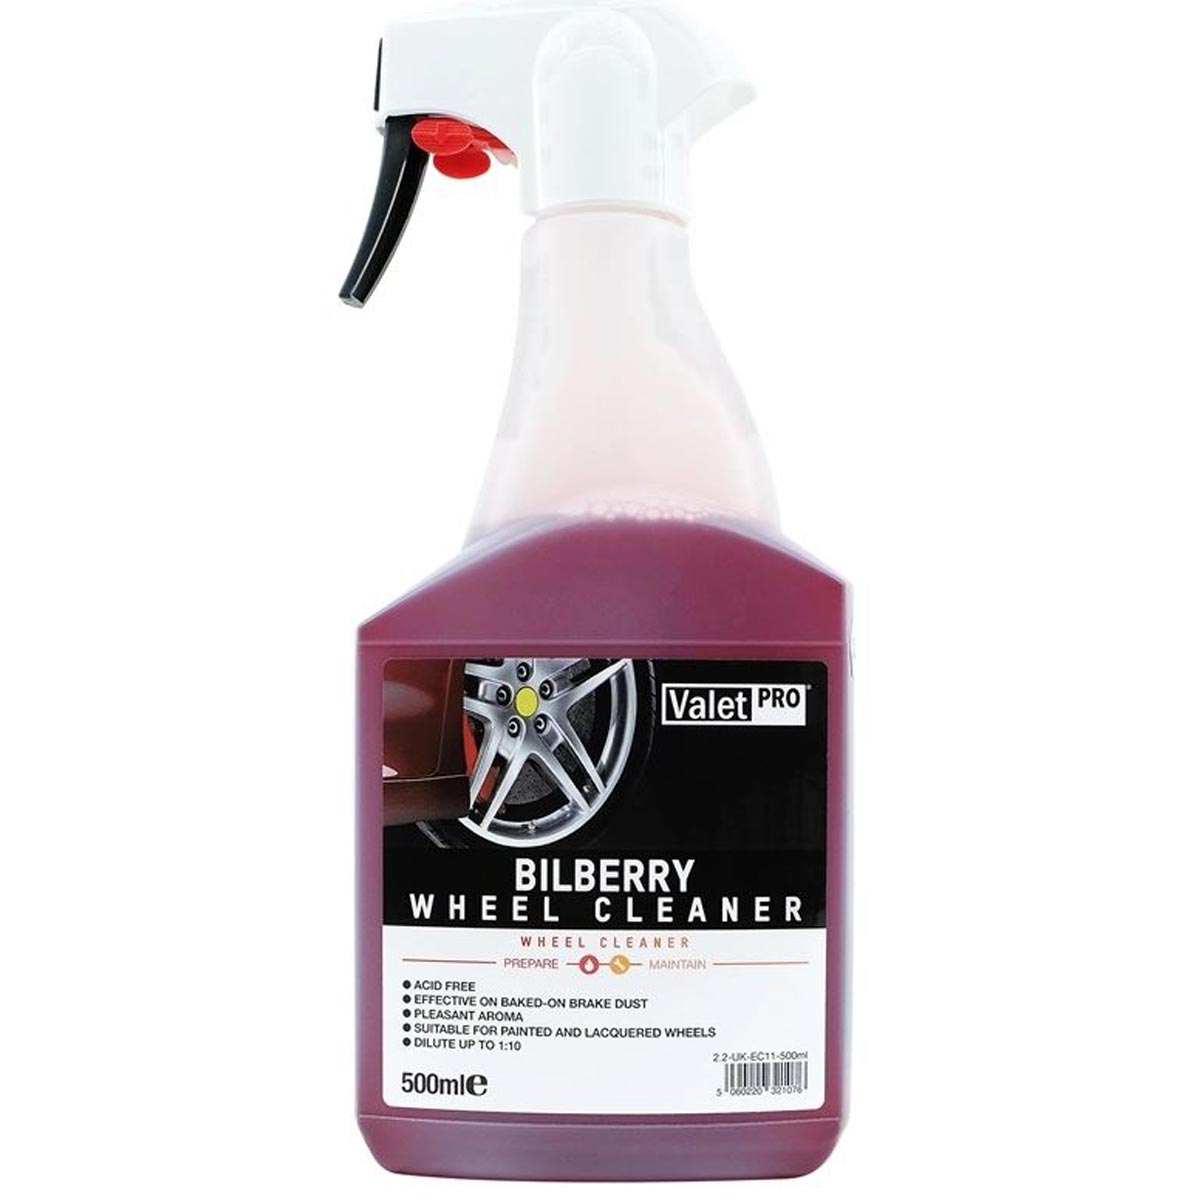 ValetPRO Bilberry Car Wheel Cleaner Acid-free - 500ml Spray